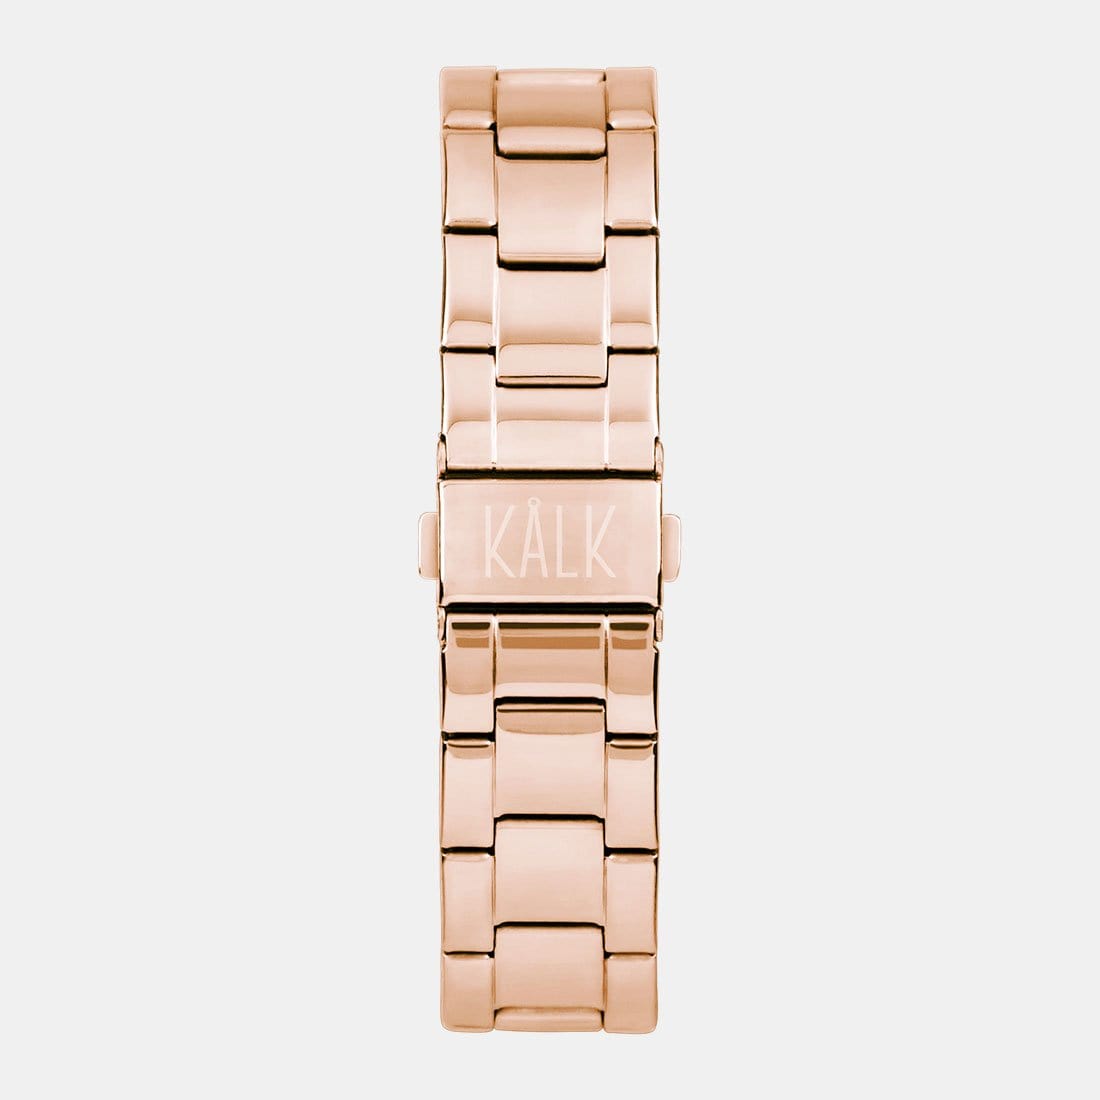 Classy Rose Gold / Light Pink Watch